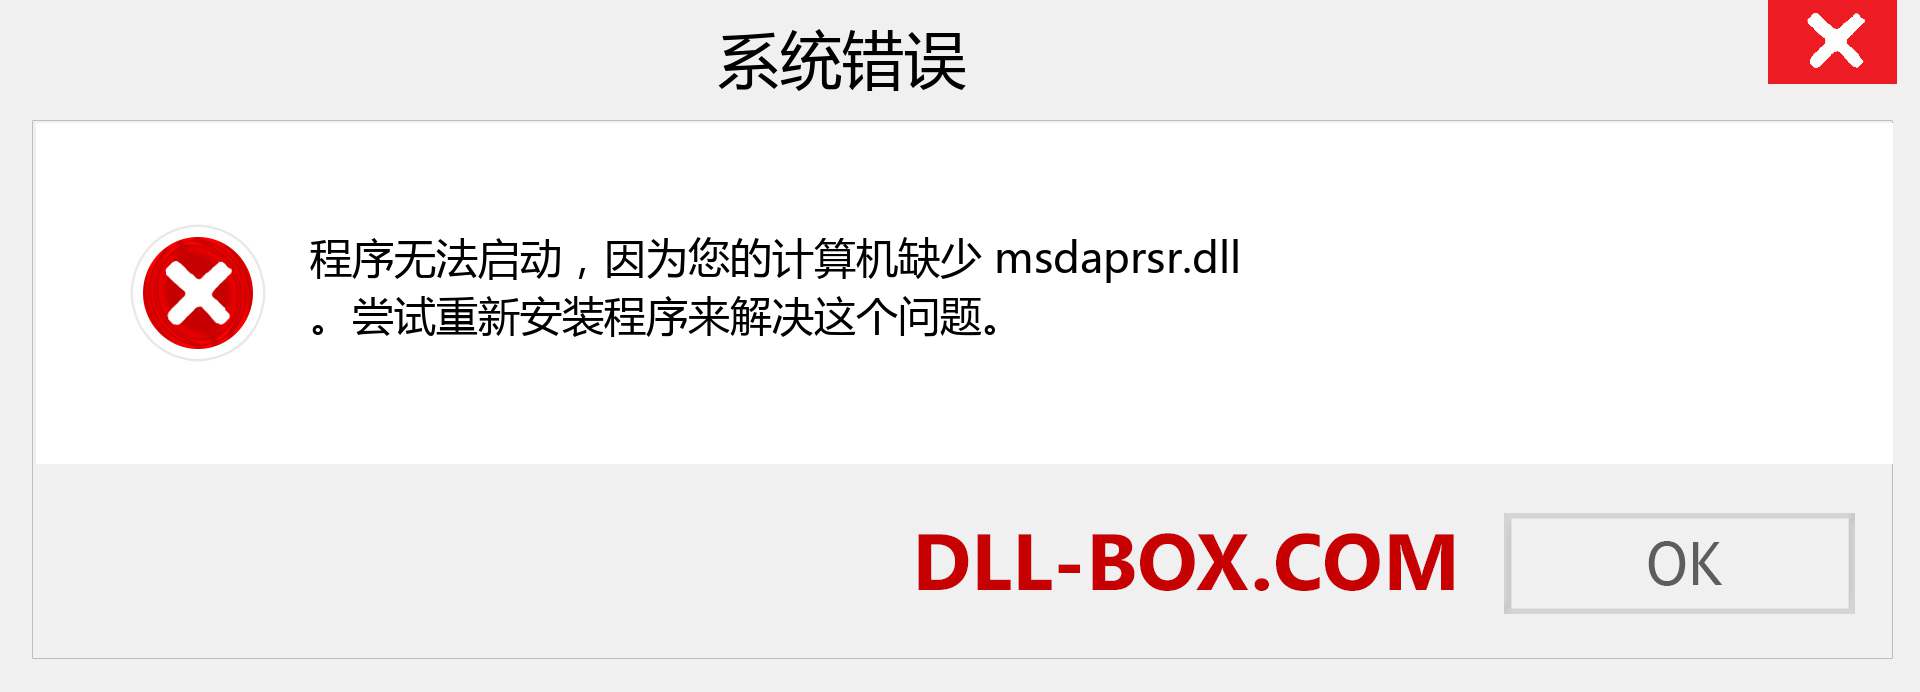 msdaprsr.dll 文件丢失？。 适用于 Windows 7、8、10 的下载 - 修复 Windows、照片、图像上的 msdaprsr dll 丢失错误